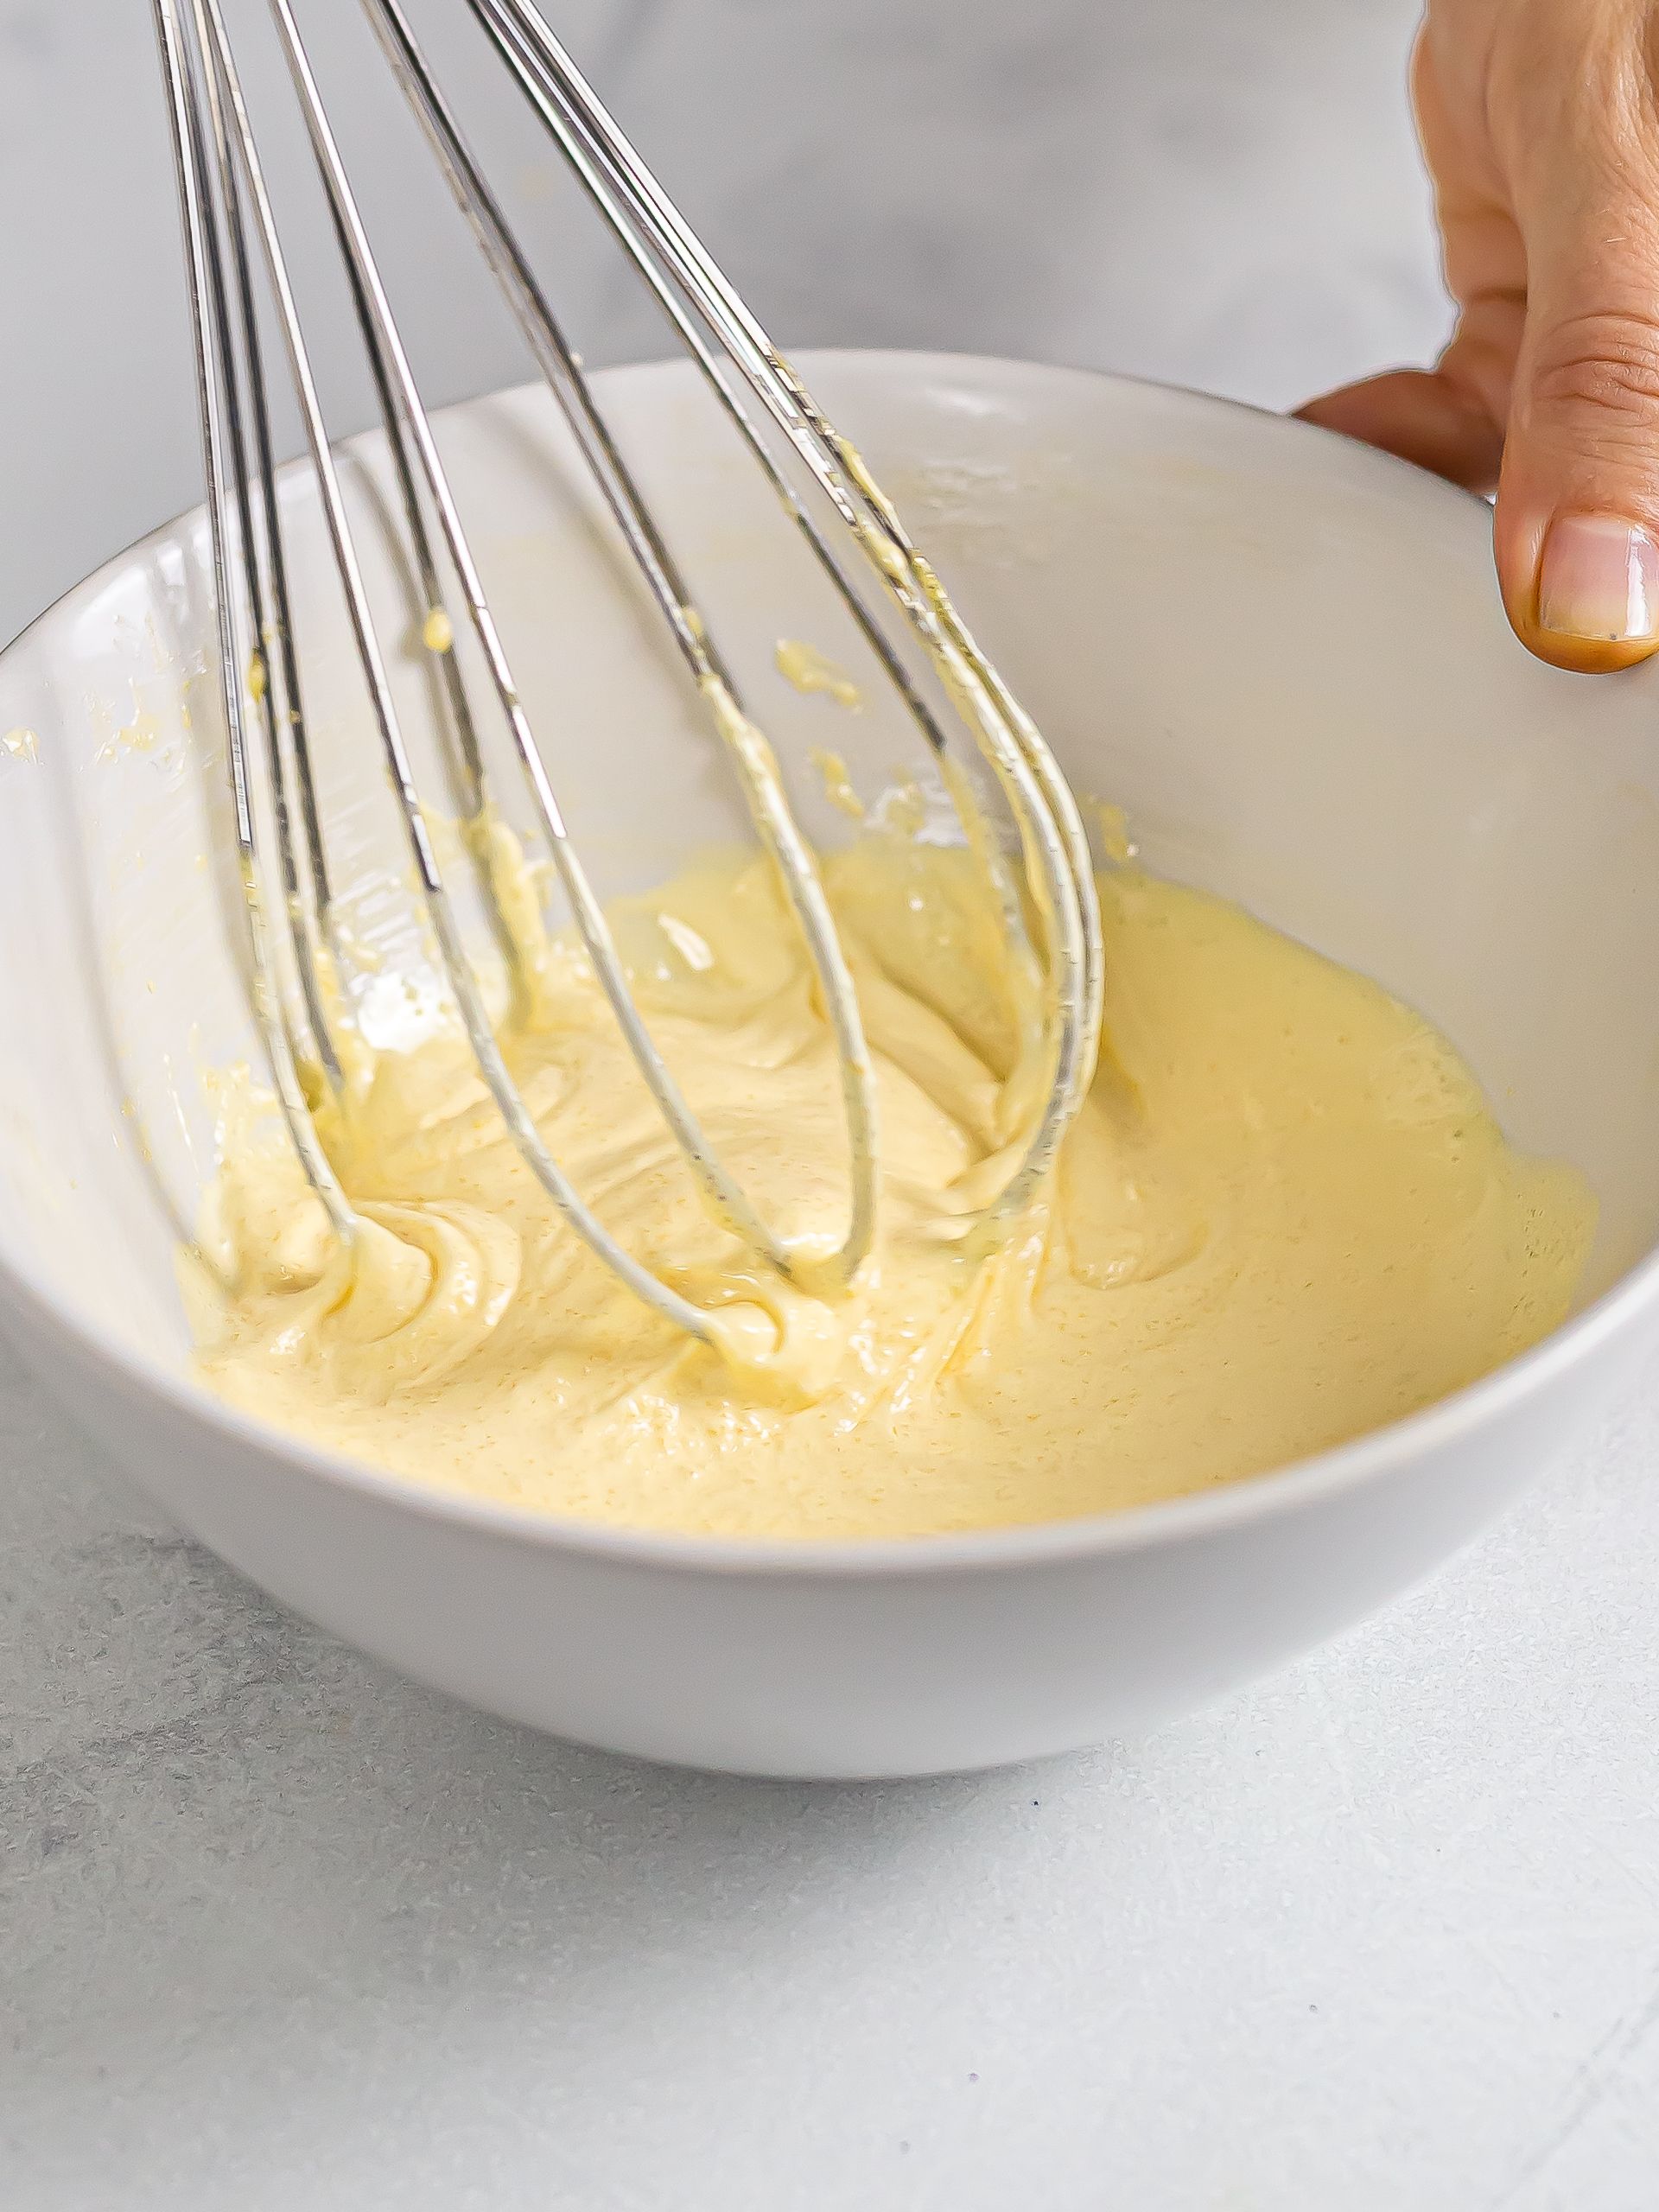 beaten yolks with sugar for cake batter